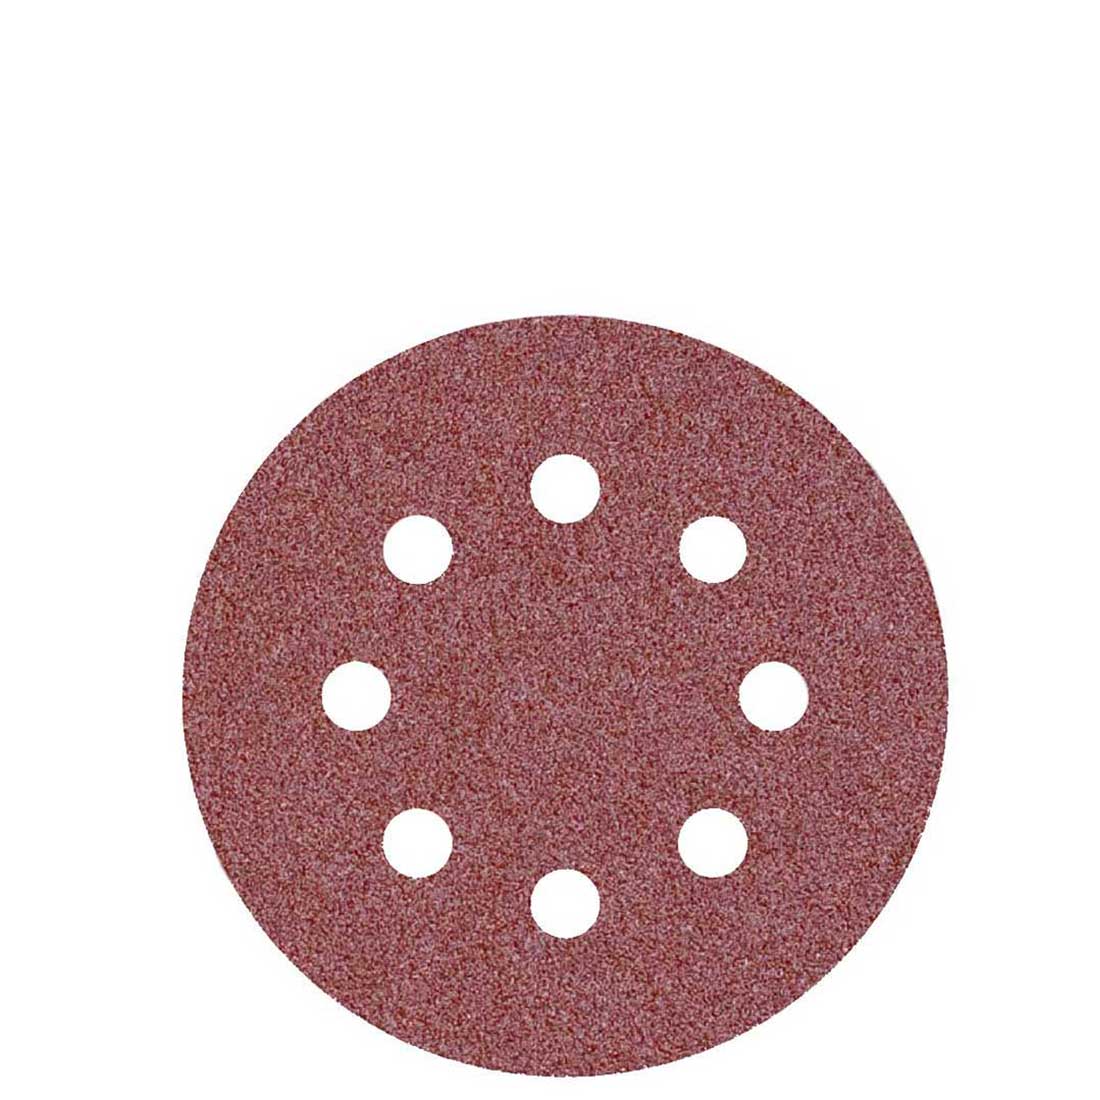 MioTools hook & loop sanding discs for random orbital sanders, G24–240, Ø 125 mm / 8 hole / aluminium oxide